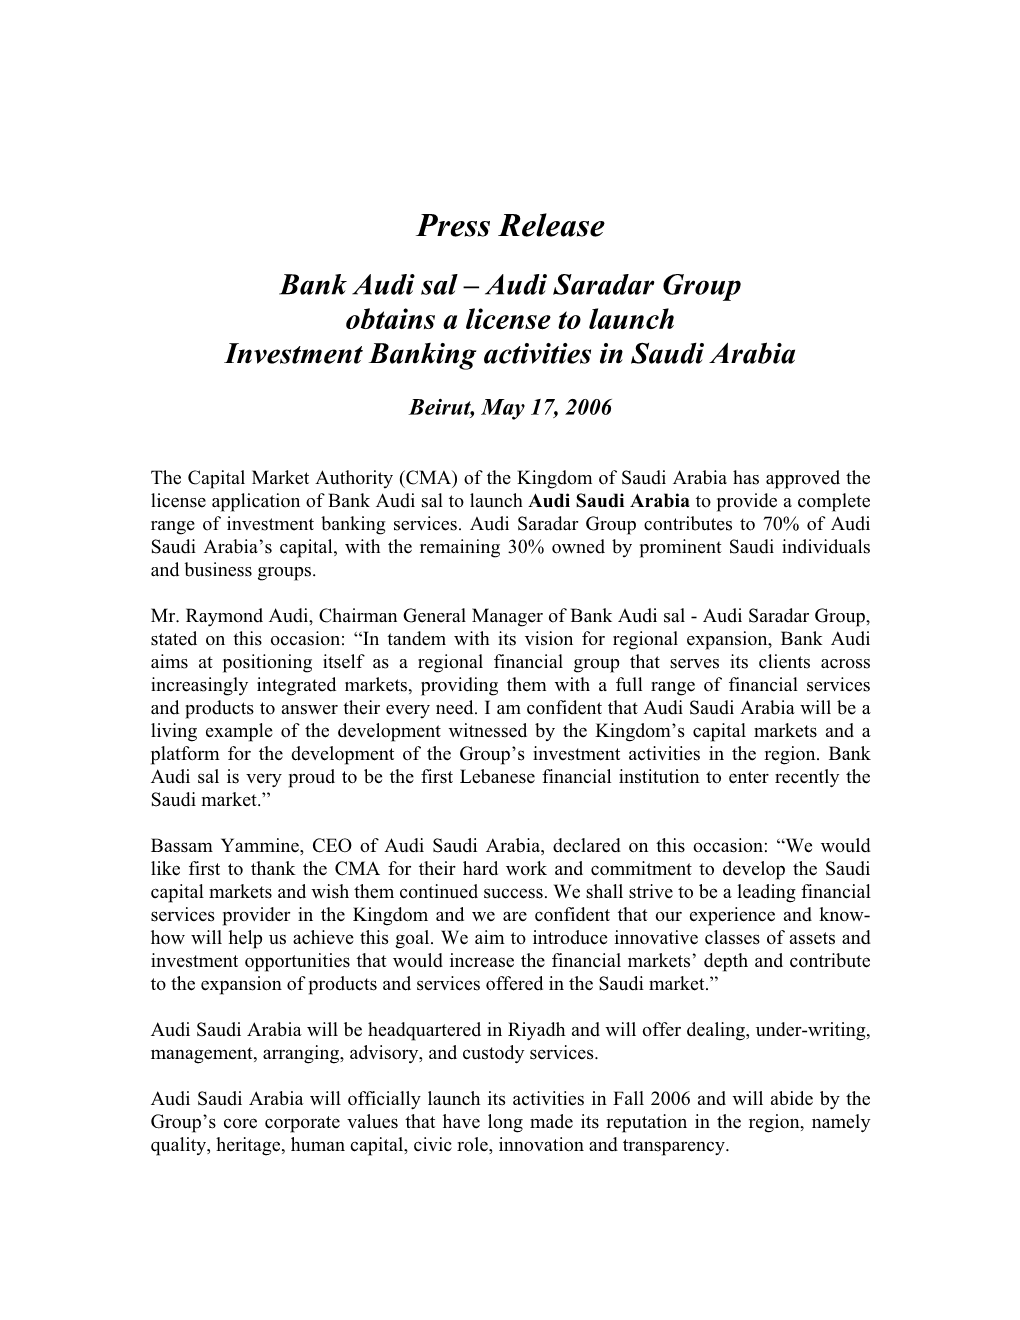 Press Release Bank Audi Sal – Audi Saradar Group Obtains a License To